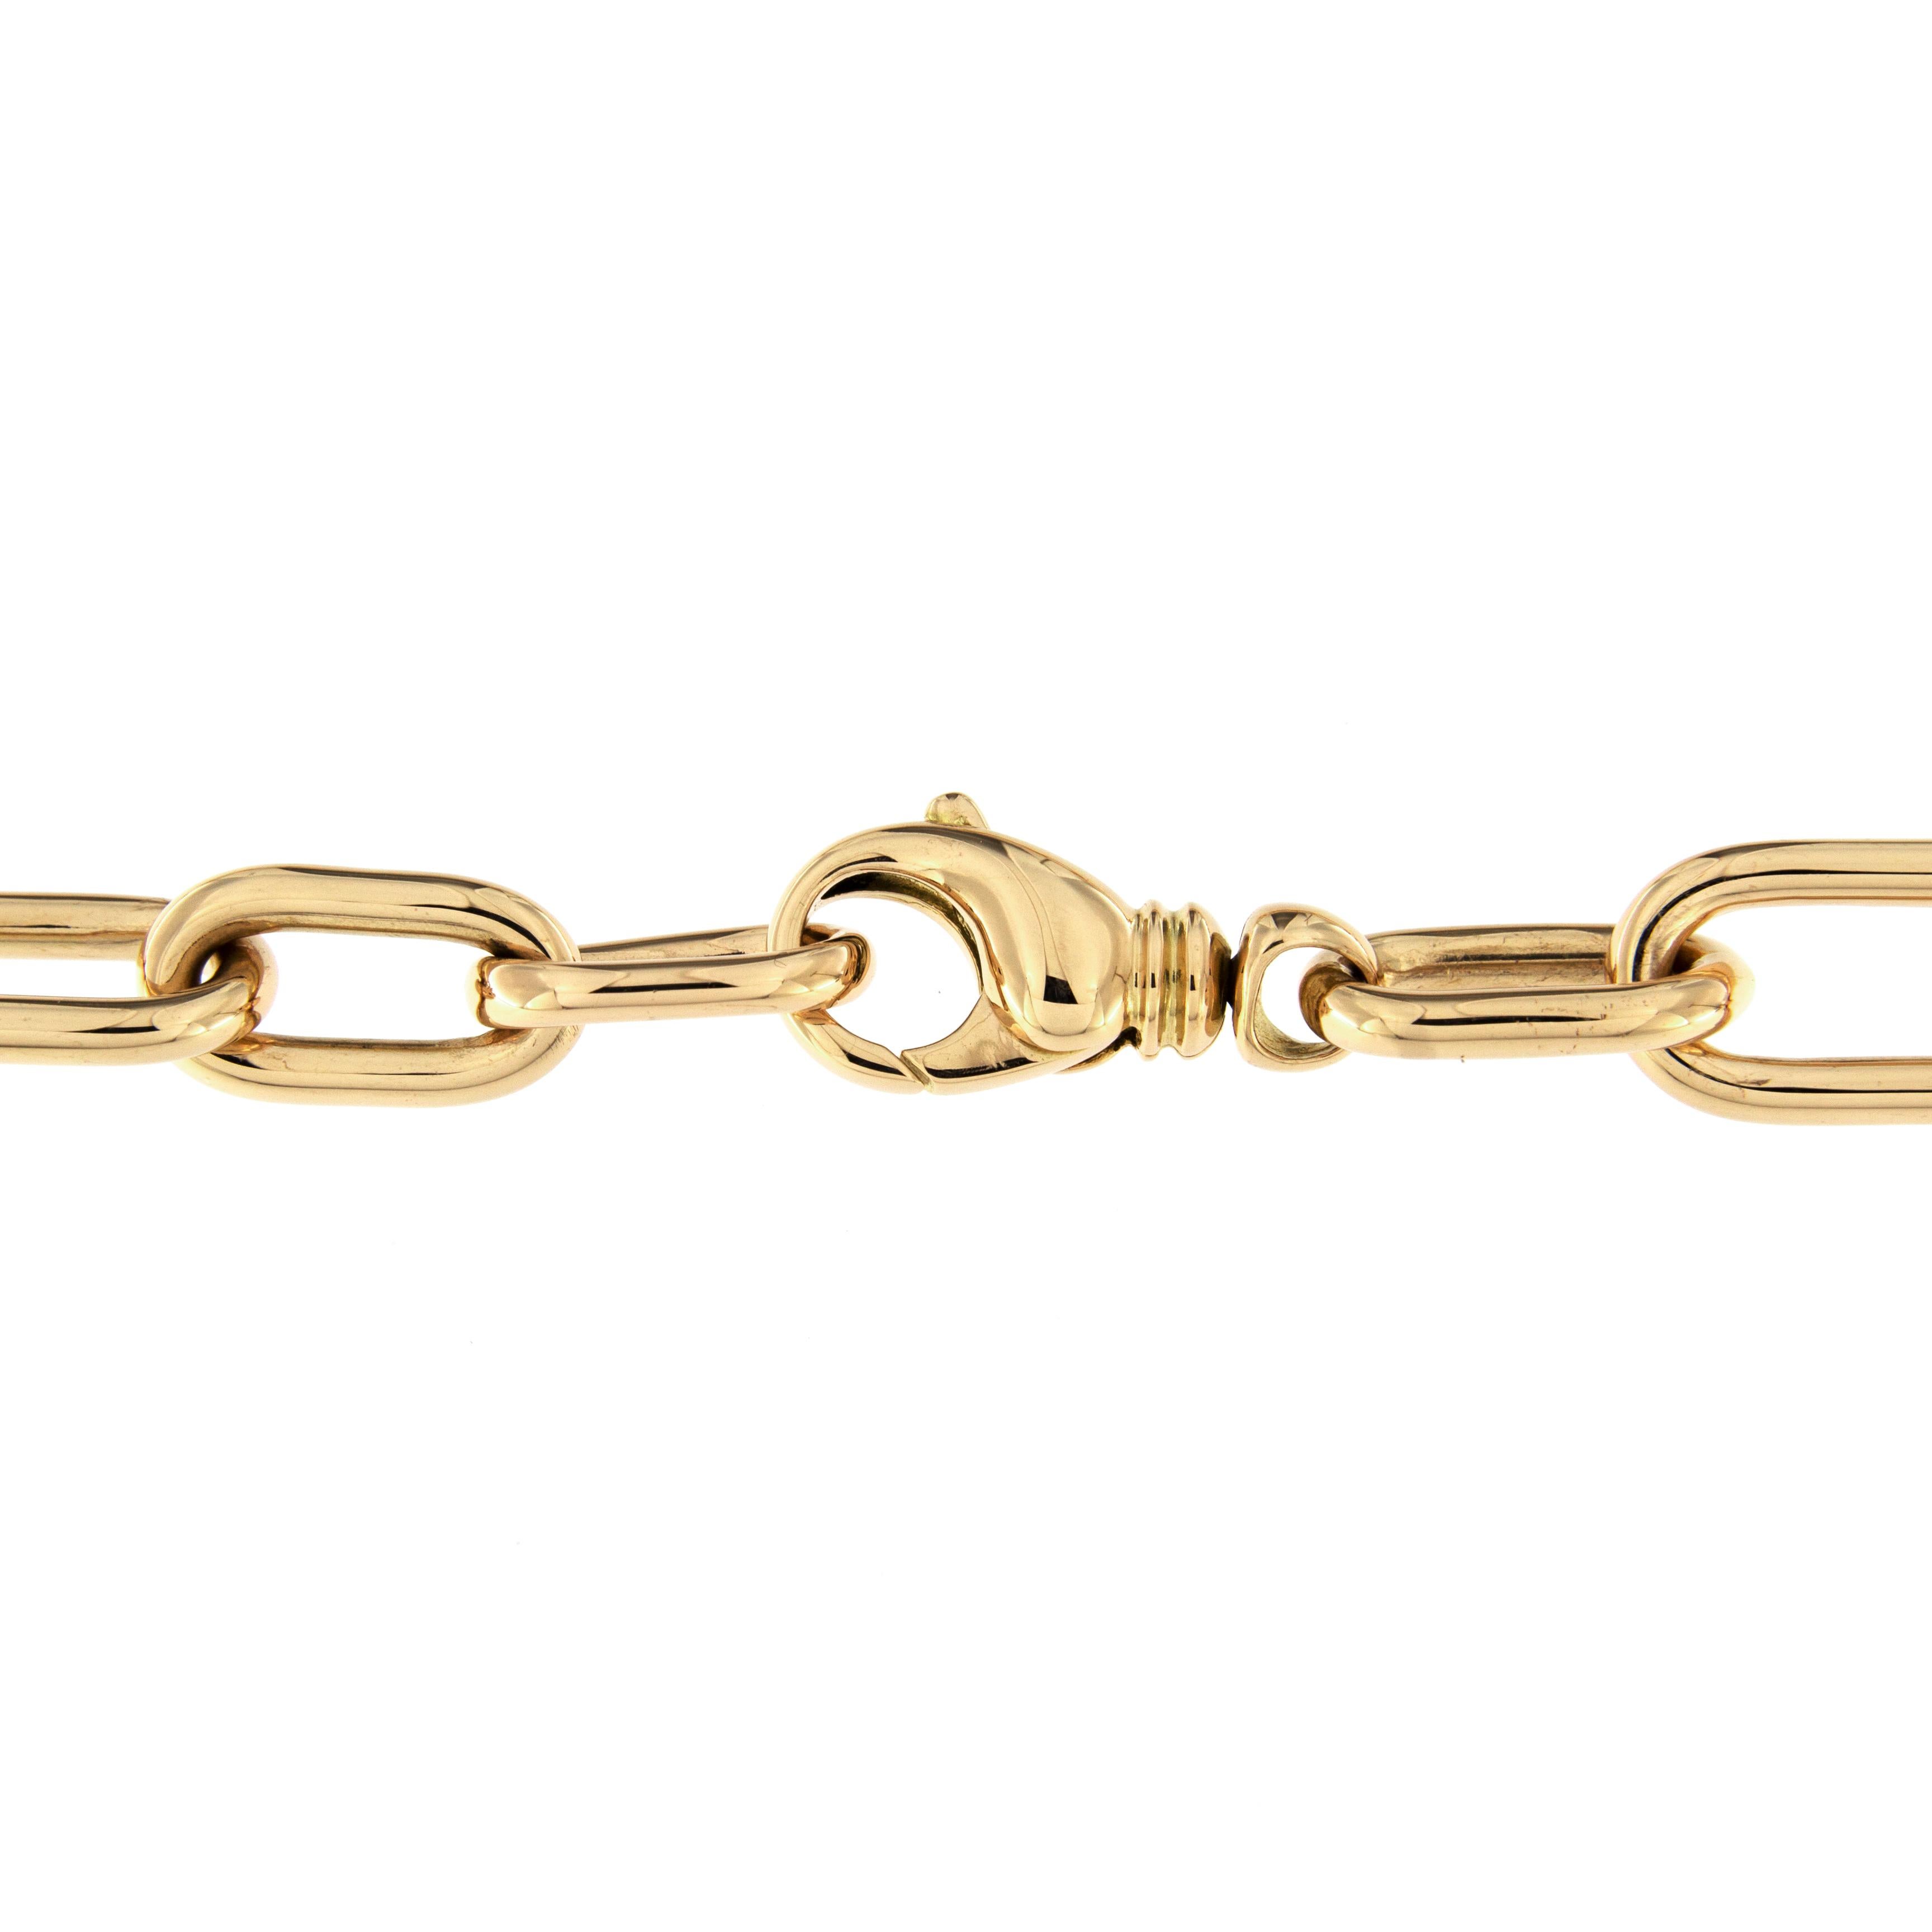 Alex Jona 18 Karat Yellow Gold Link Chain Necklace For Sale 1